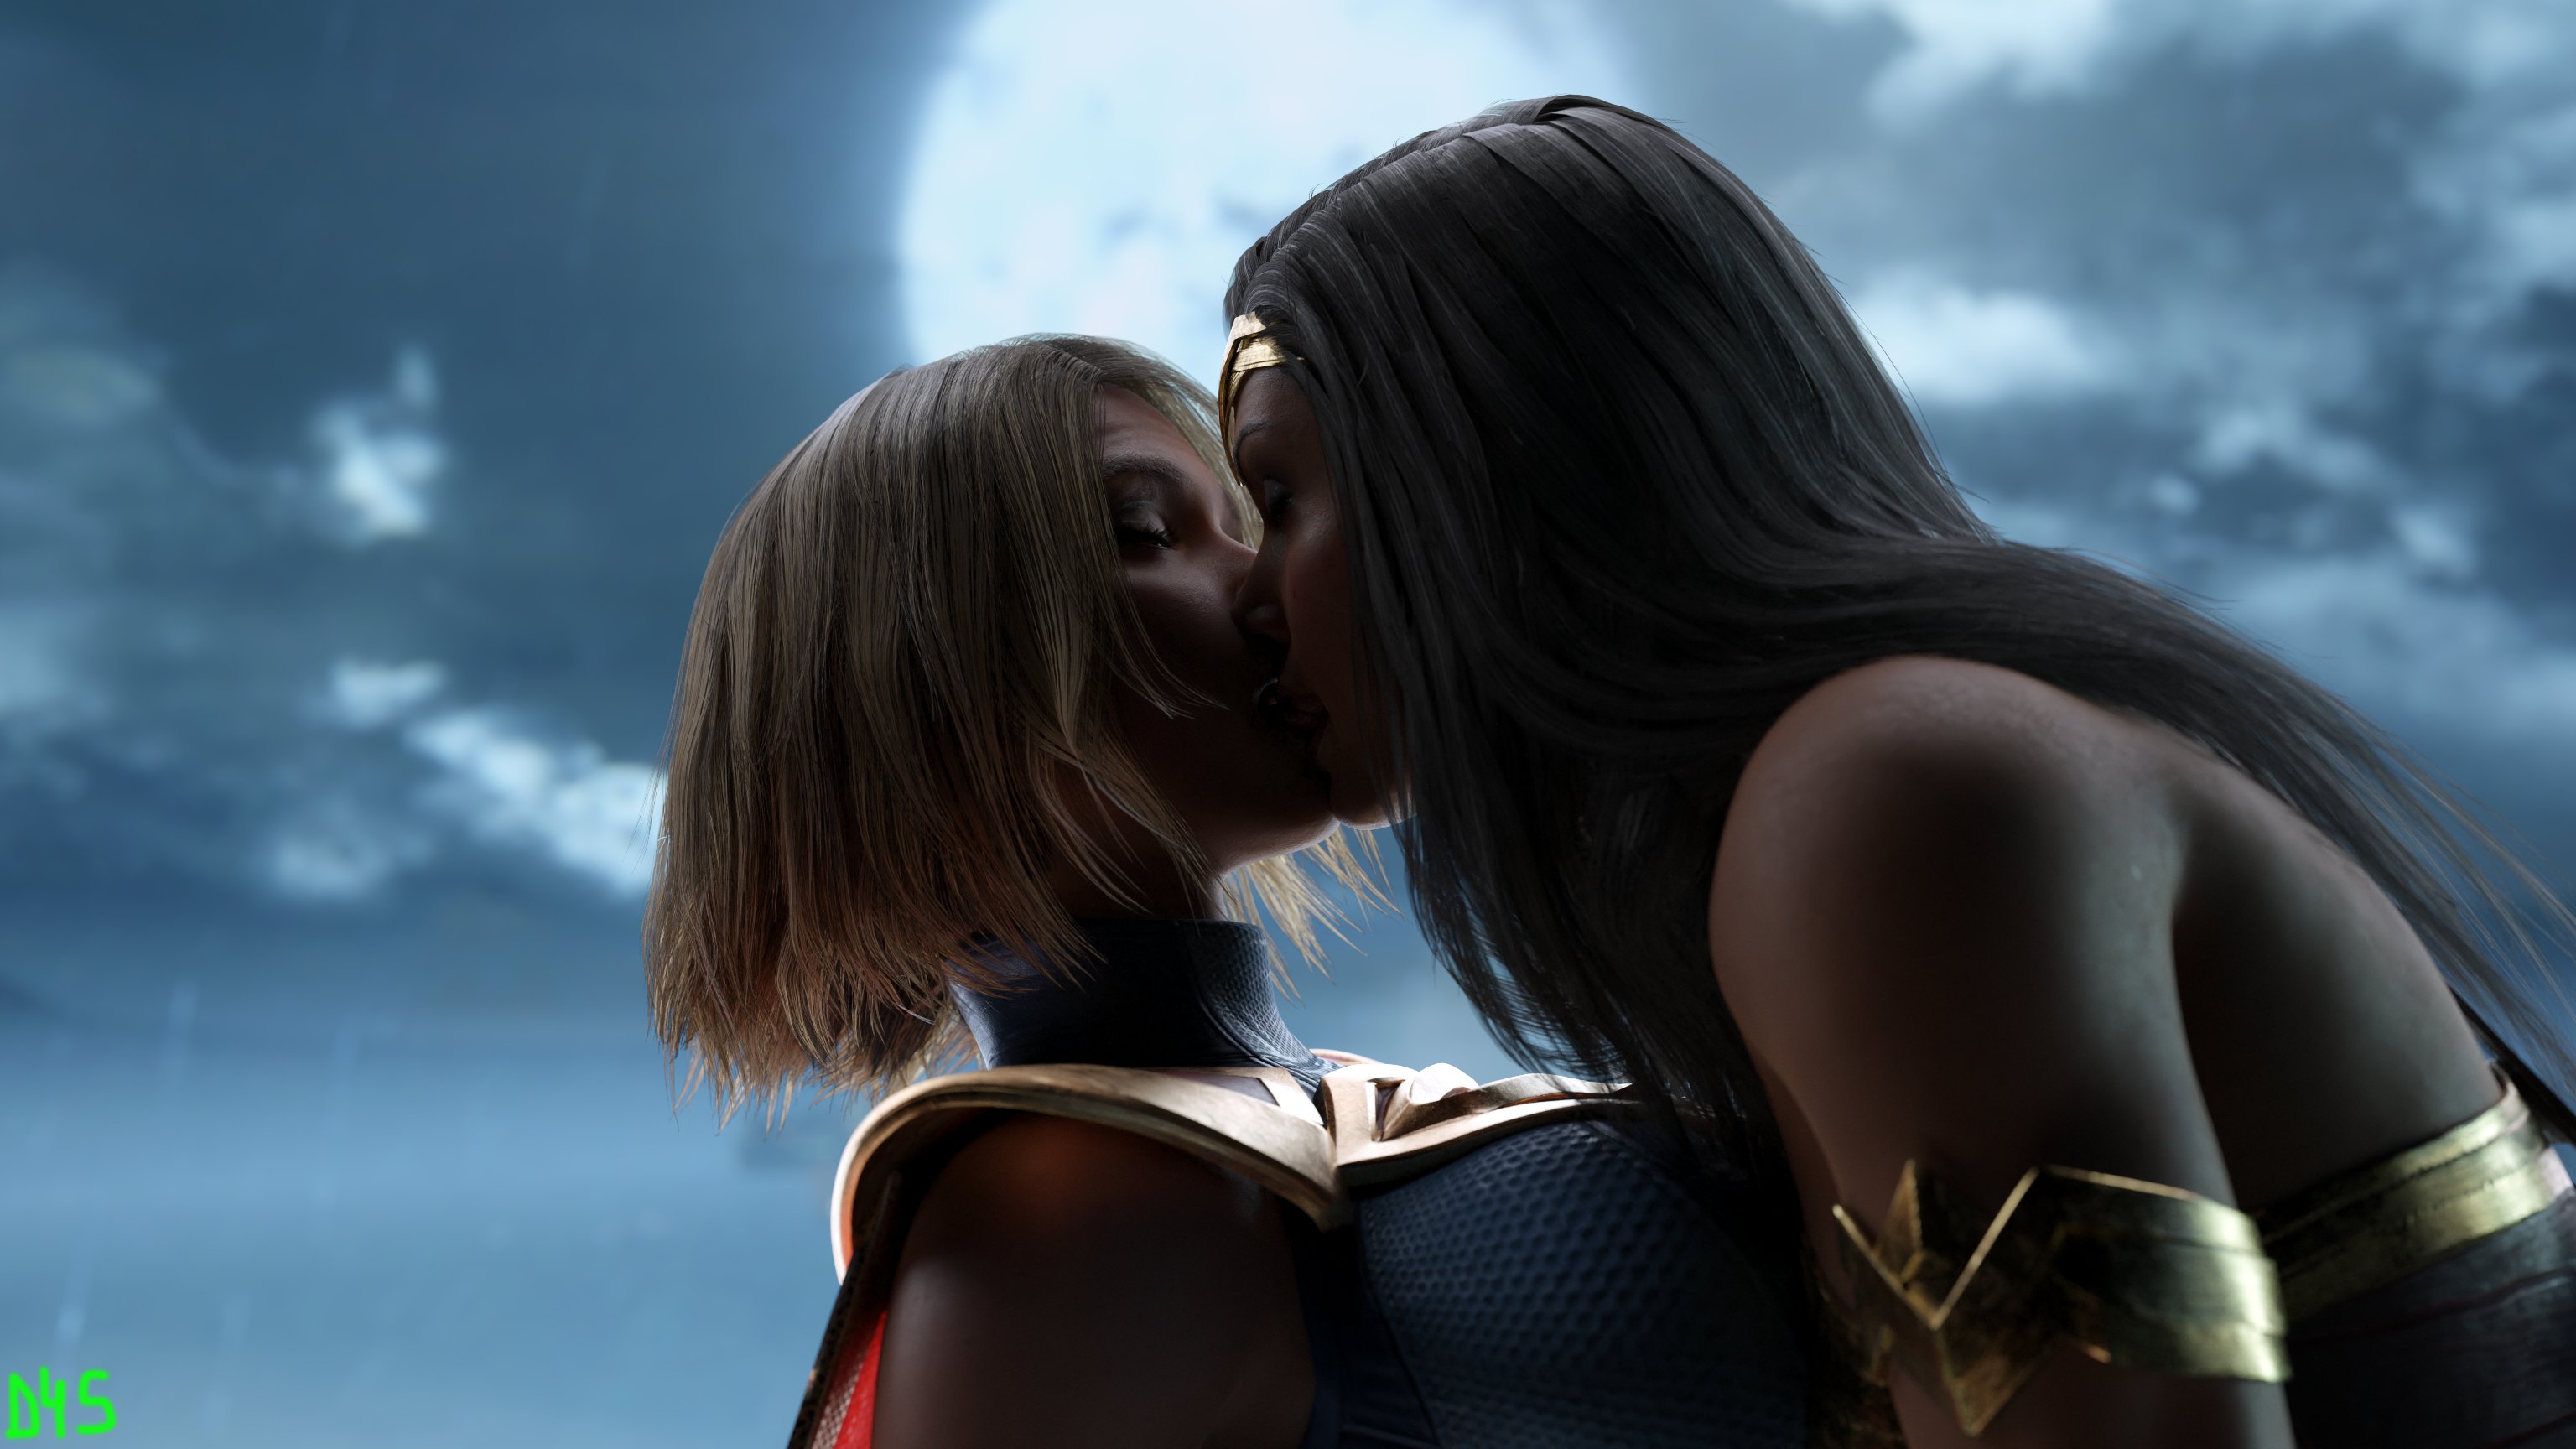 Wonder woman lesbian kiss